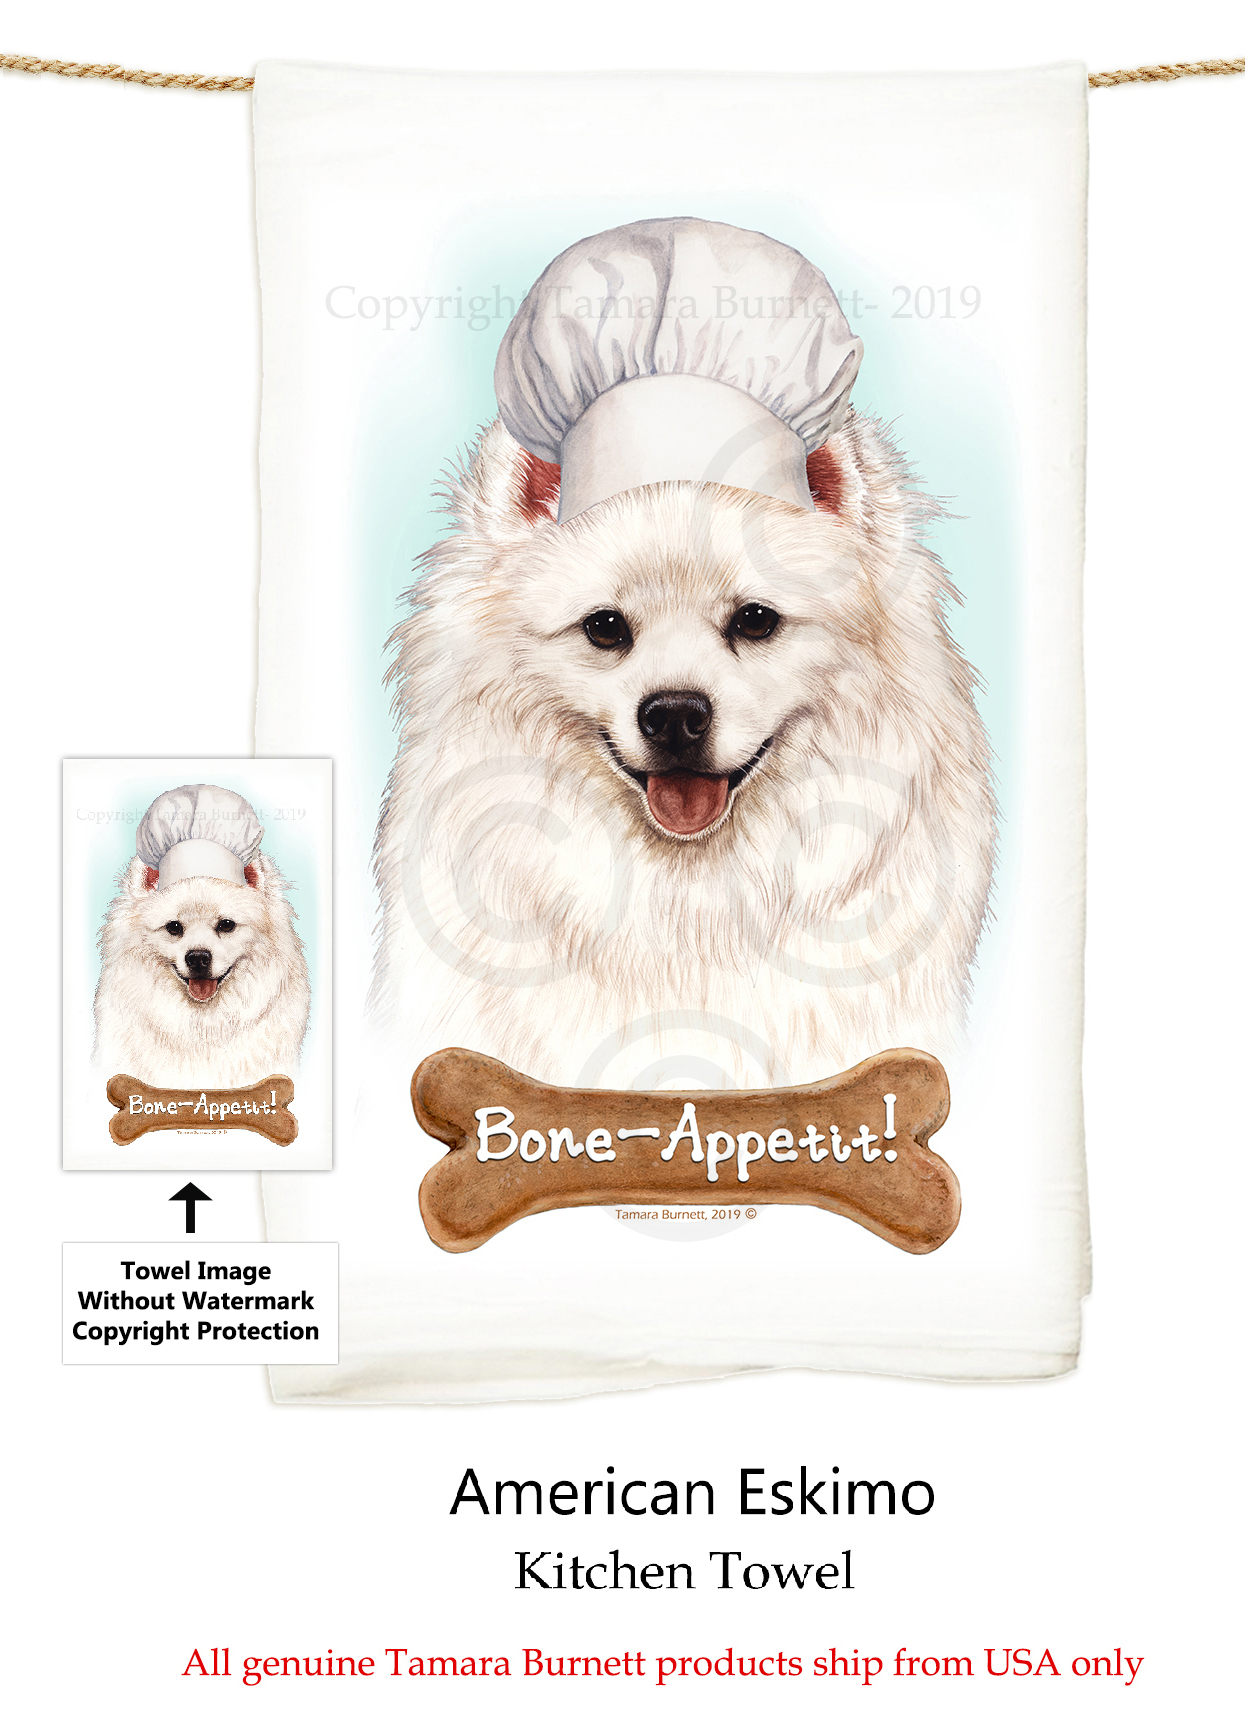 American Eskimo - Flour Sack Towel image sized 1245 x 1717